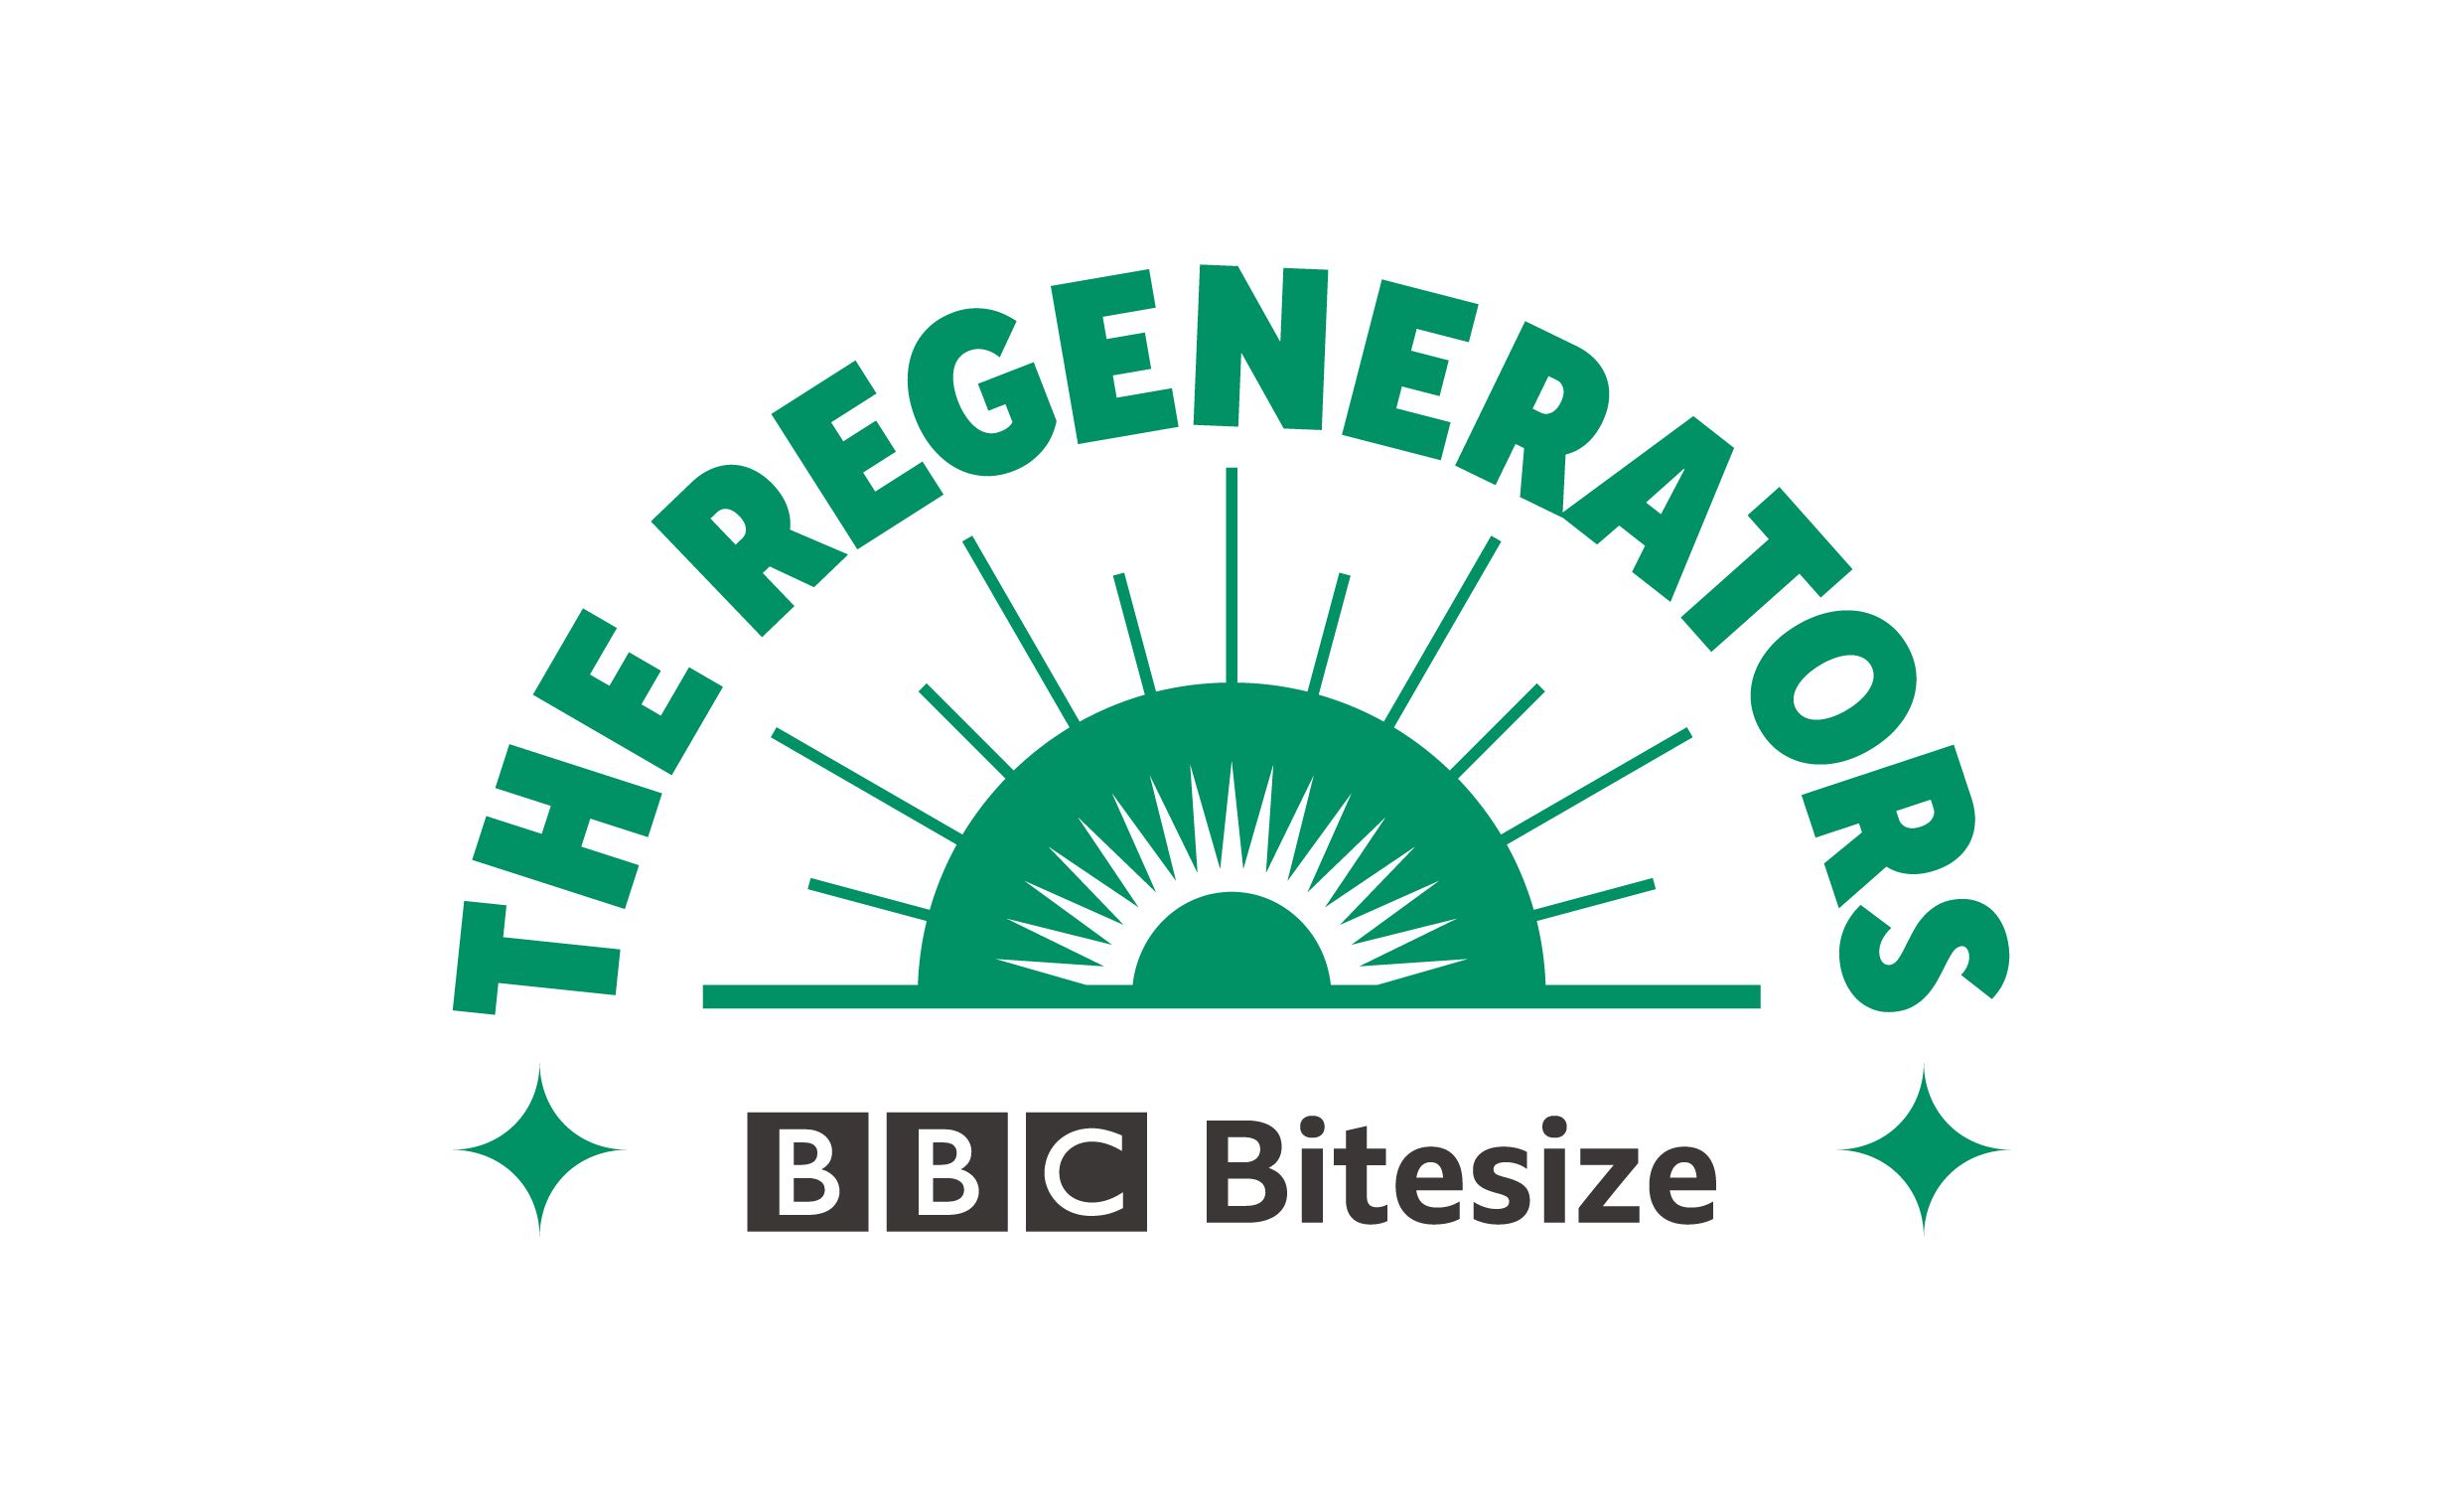 BBC Bitesize launches The Regenerators